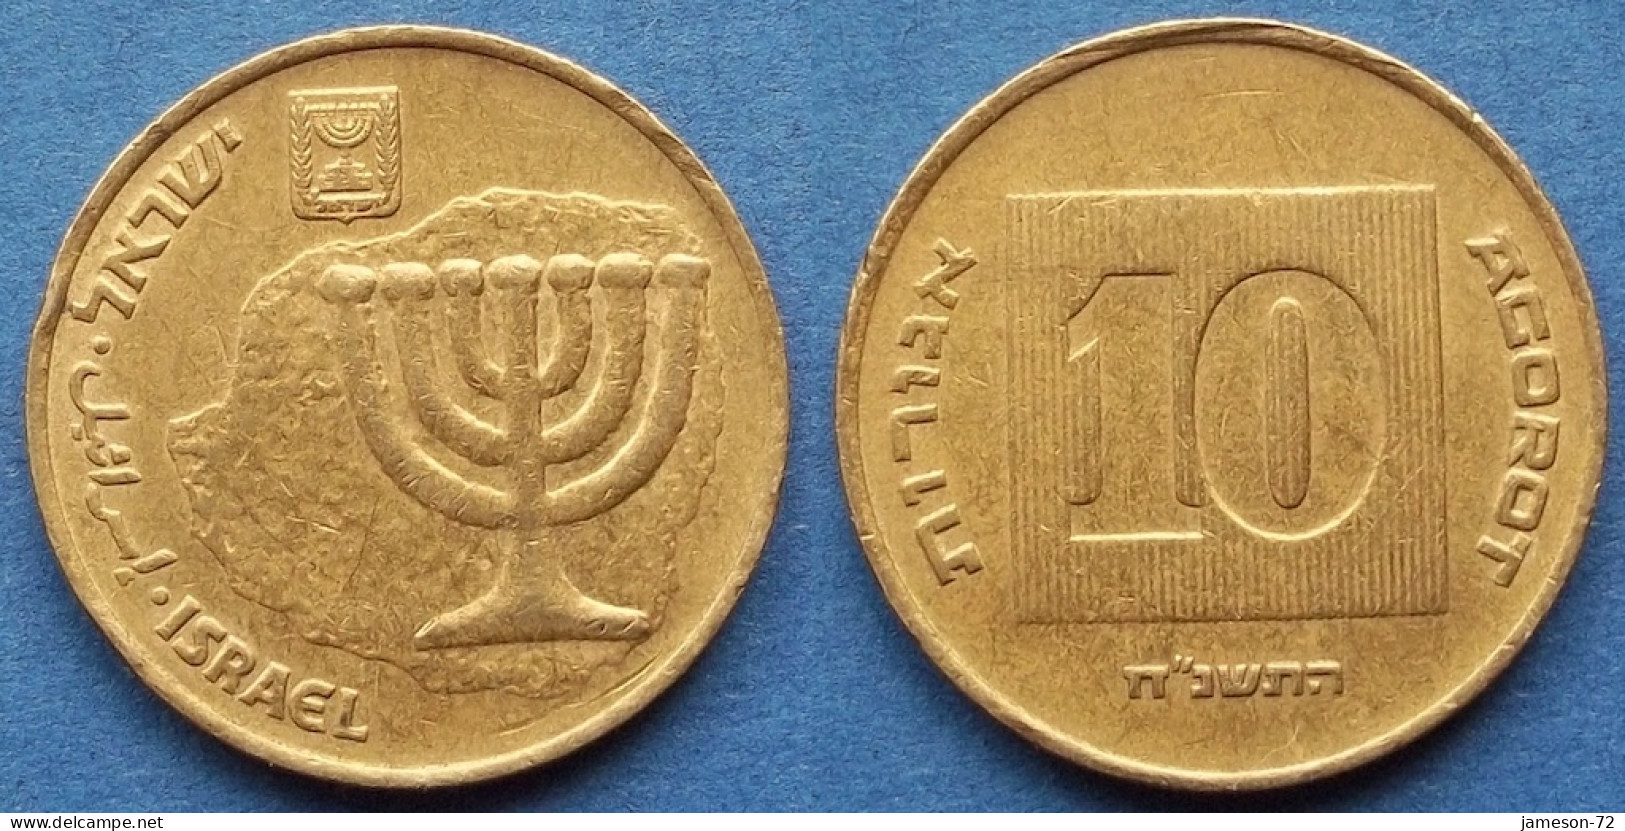 ISRAEL - 10 Agorot JE 5758 (1998AD) "Menorah" KM# 158 Monetary Reform (1985) - Edelweiss Coins - Israel